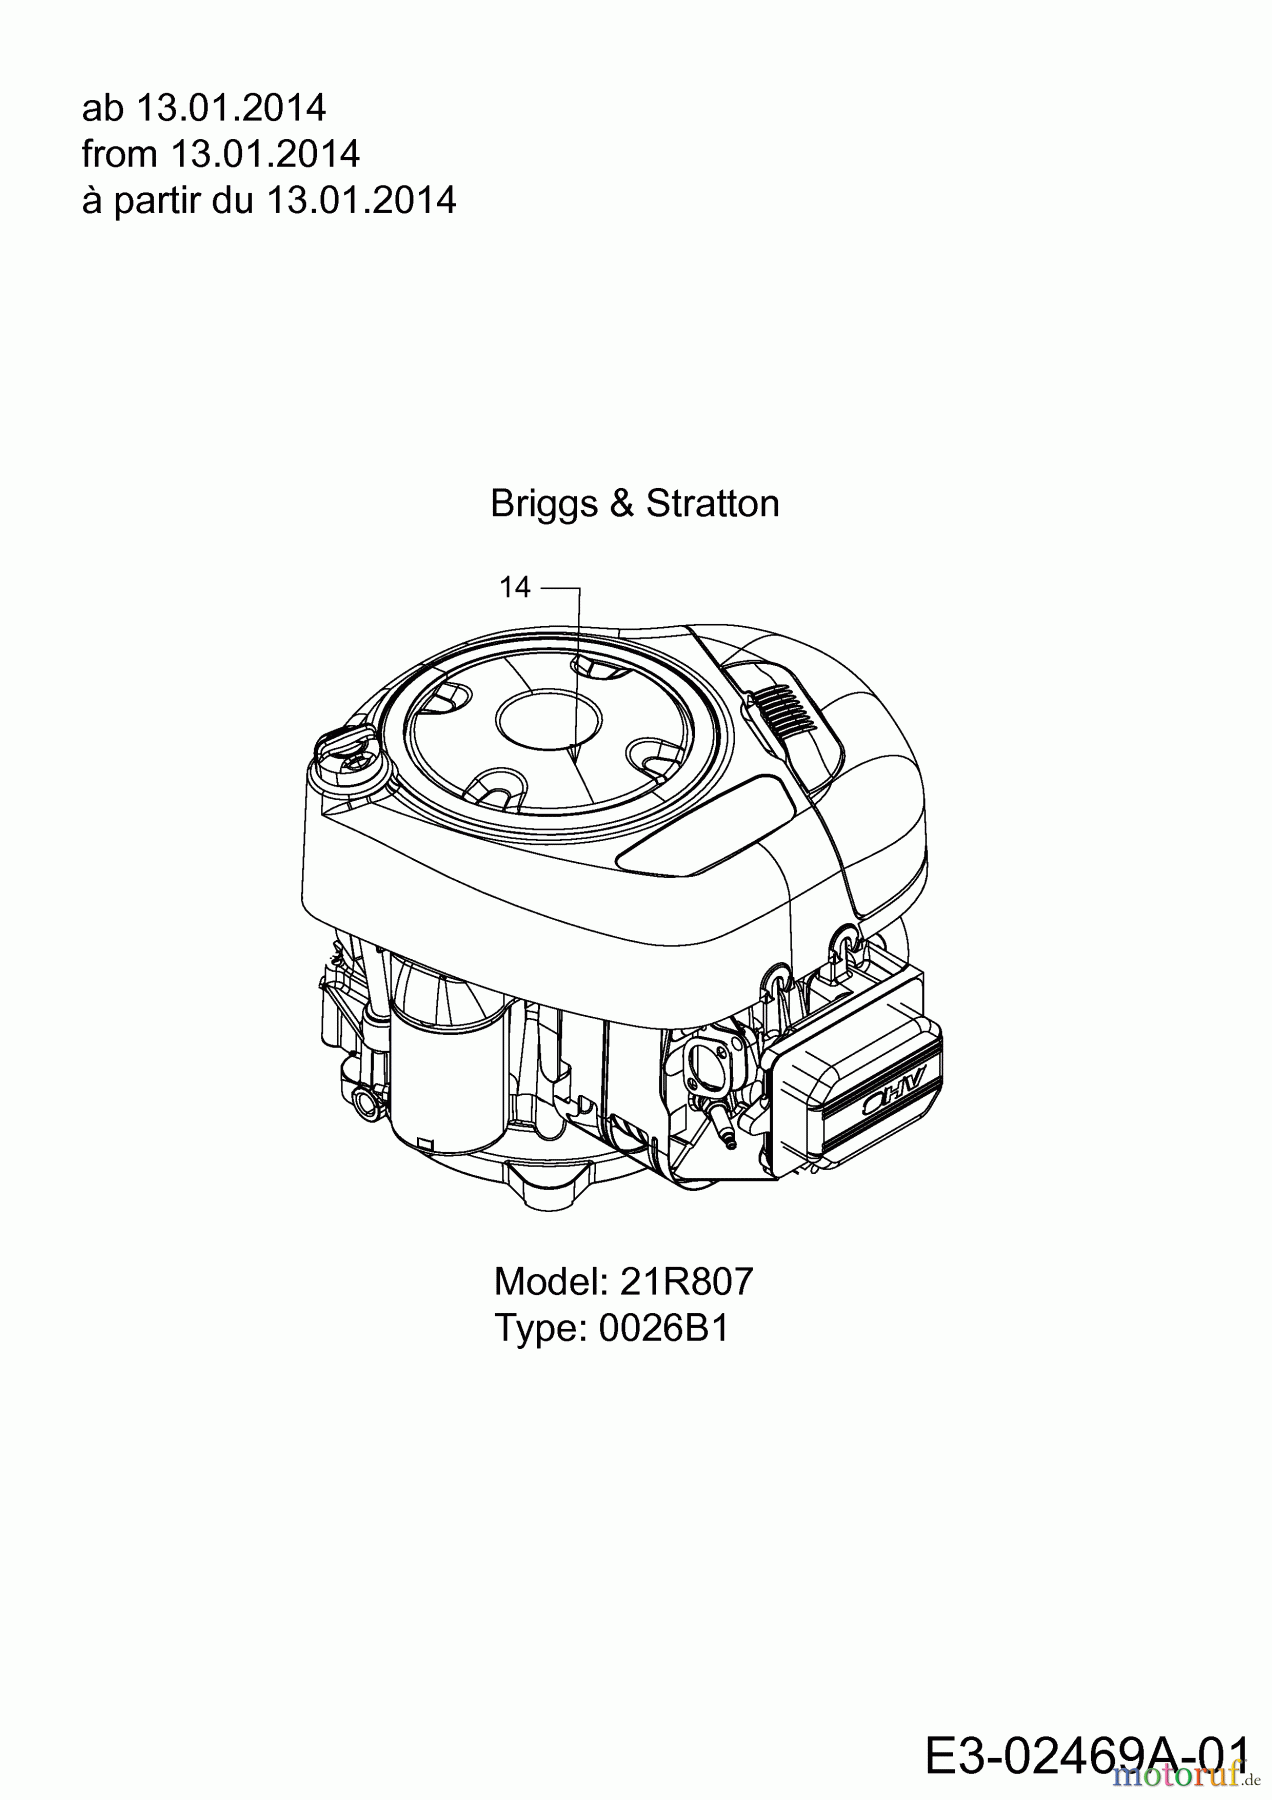  Blisar Rasentraktoren GE 130 13HH763E607  (2014) Motor Briggs & Stratton ab 13.01.2014